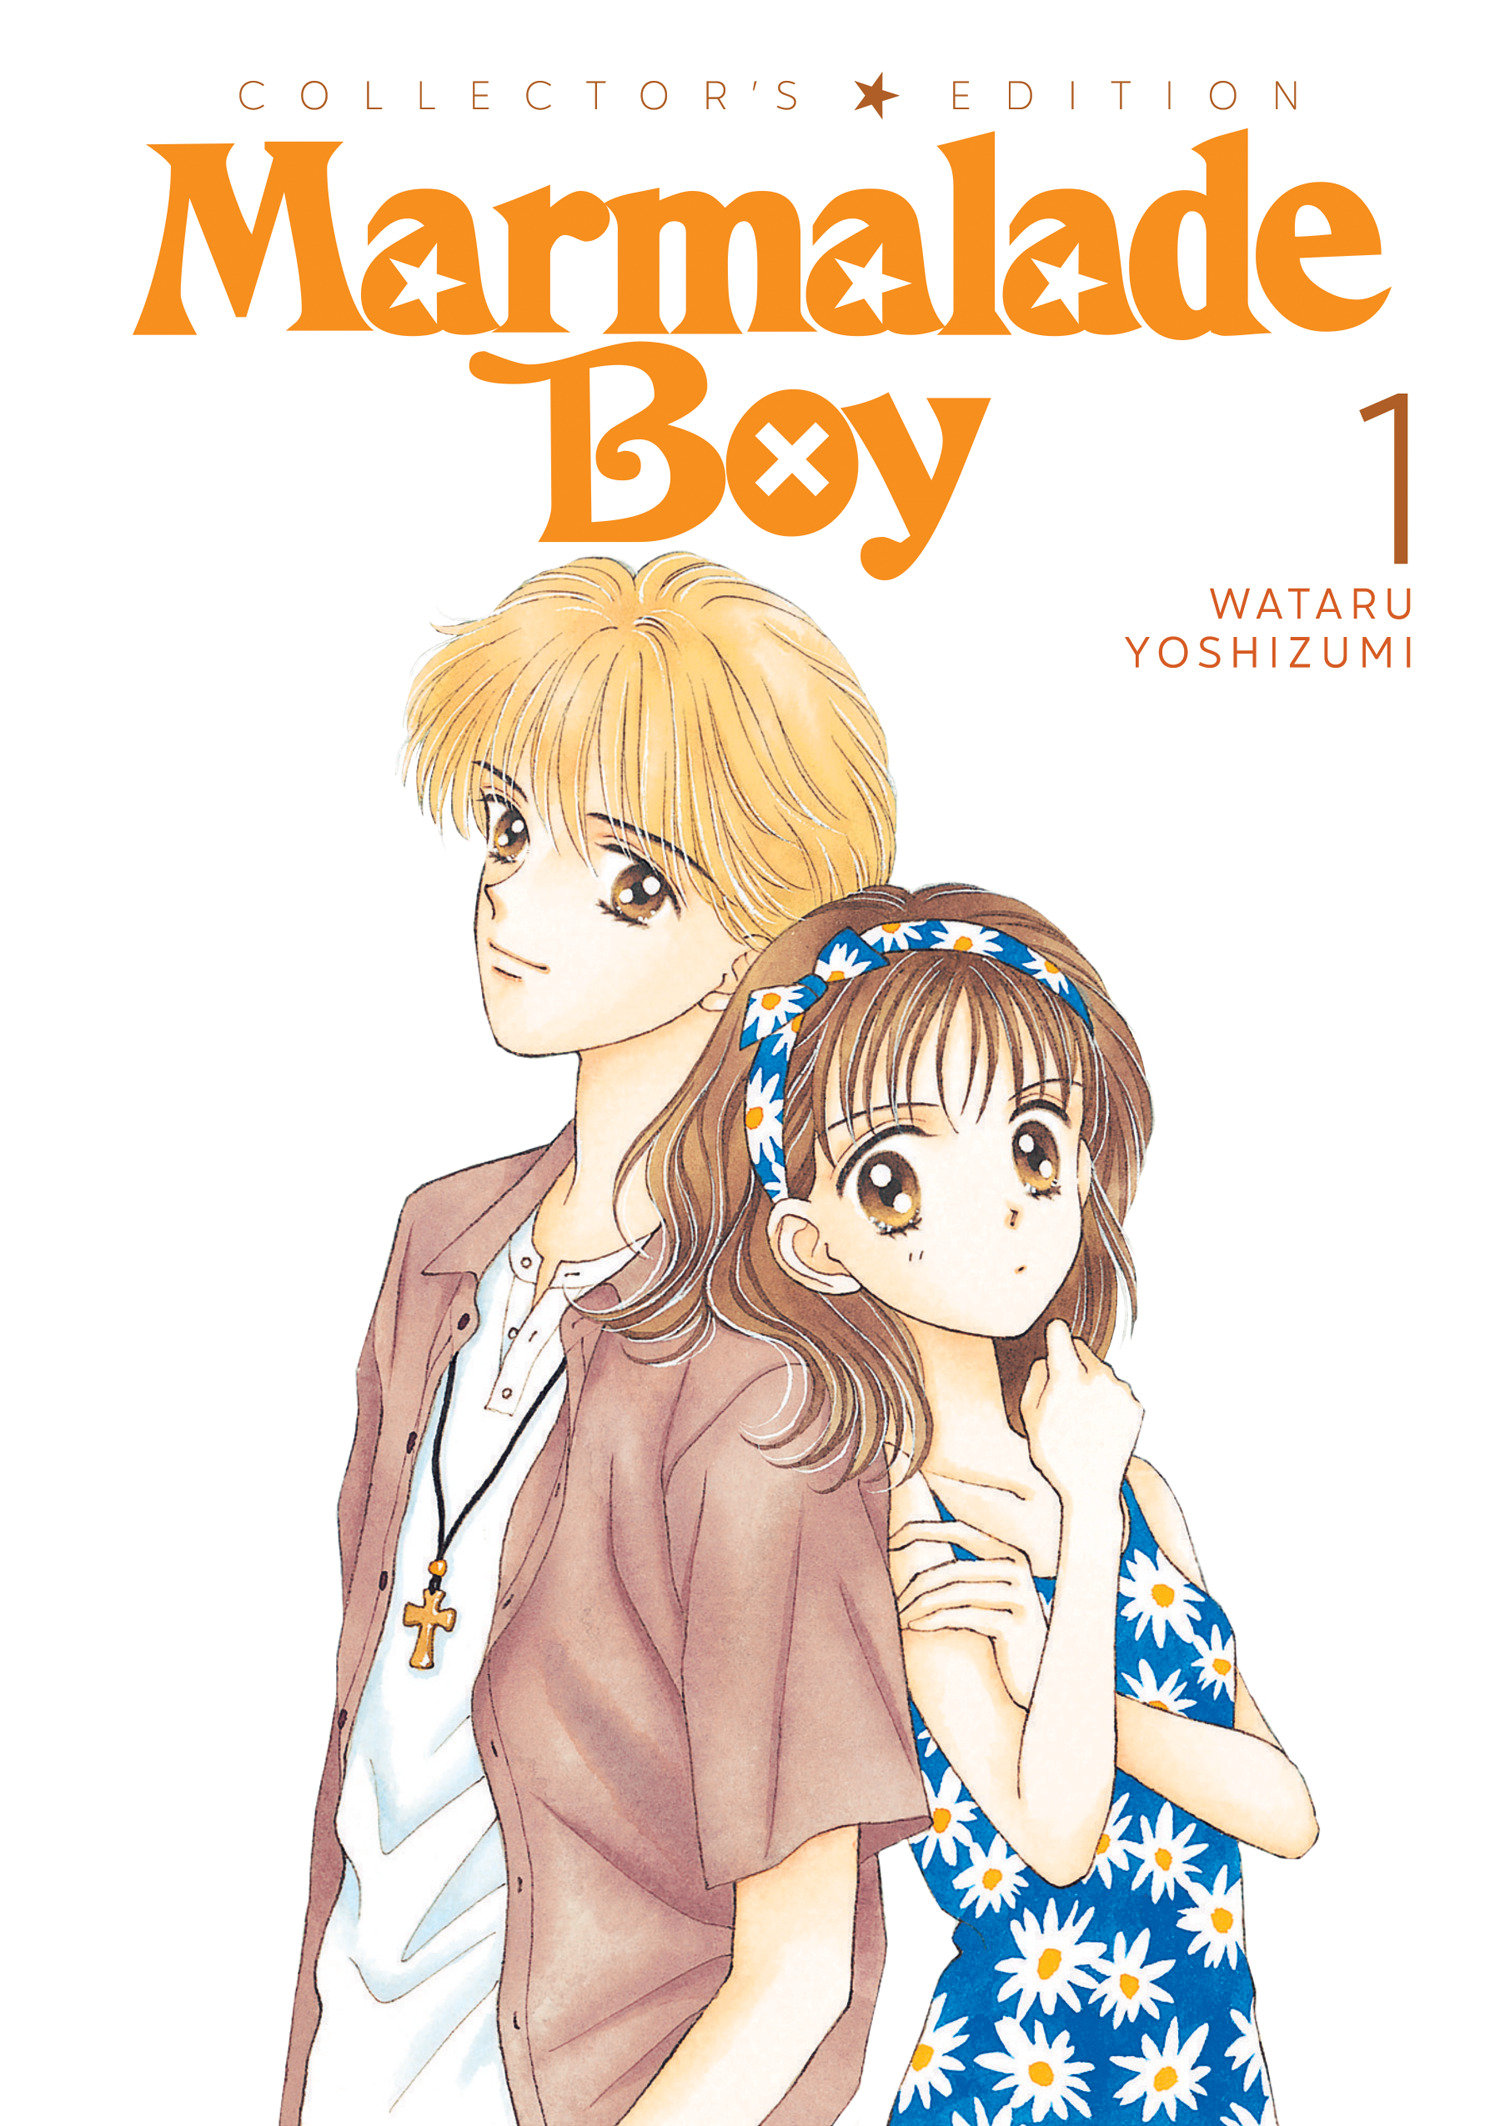 Marmalade Boy Collected Edition Manga Volume 1